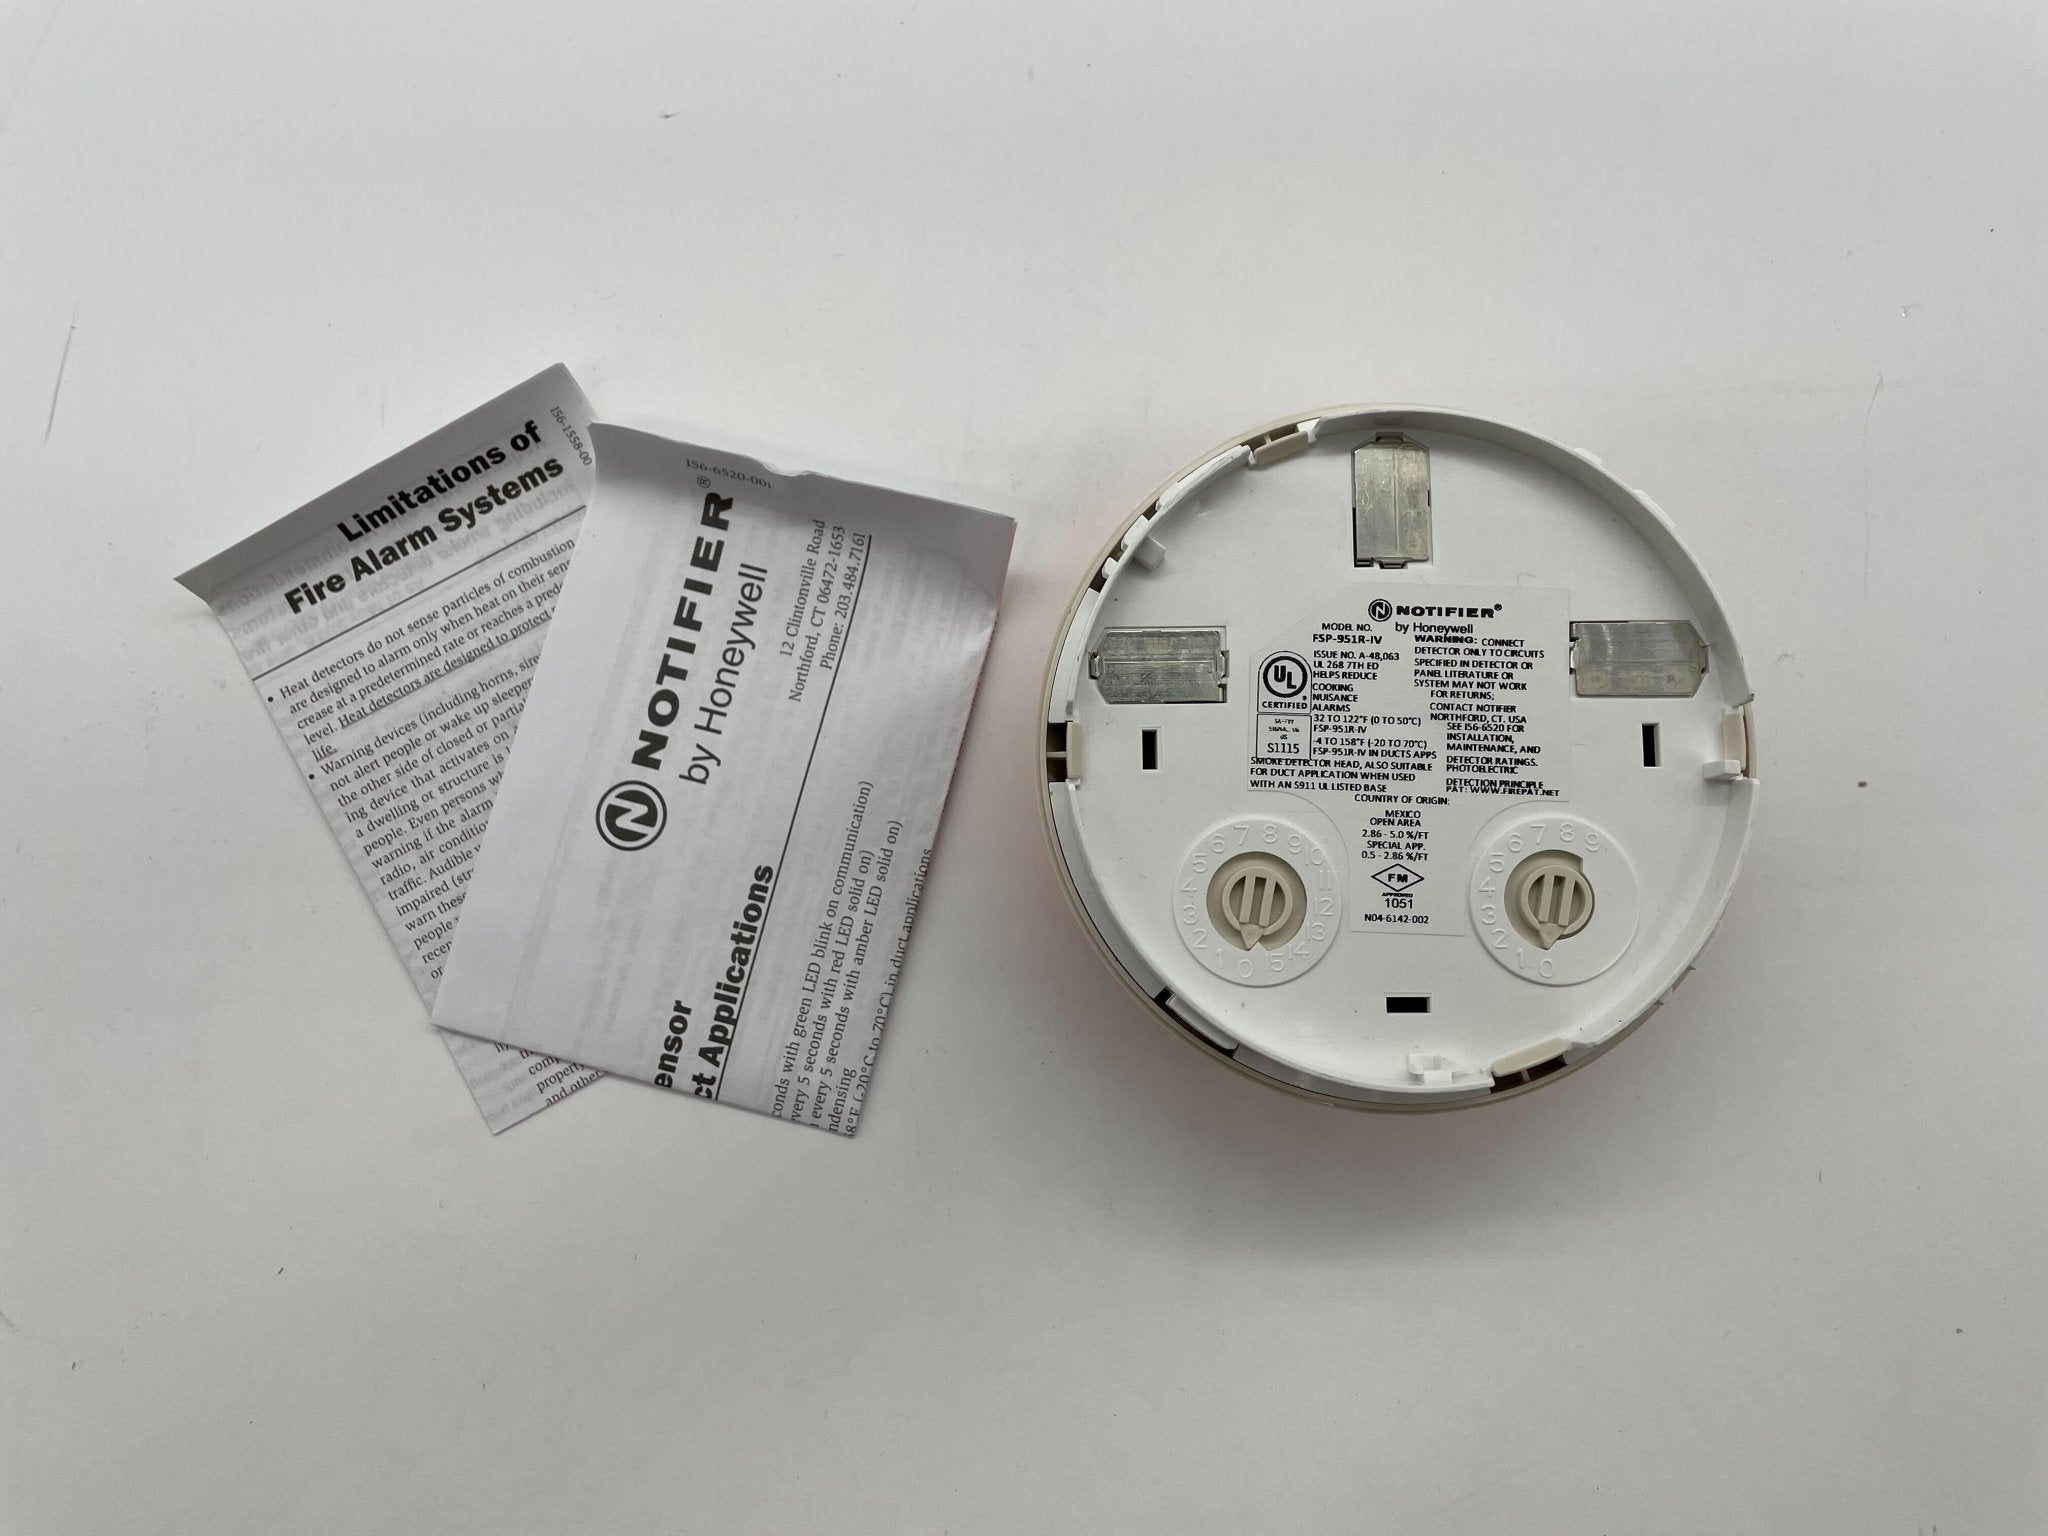 Notifier FSP-951R-IV - The Fire Alarm Supplier